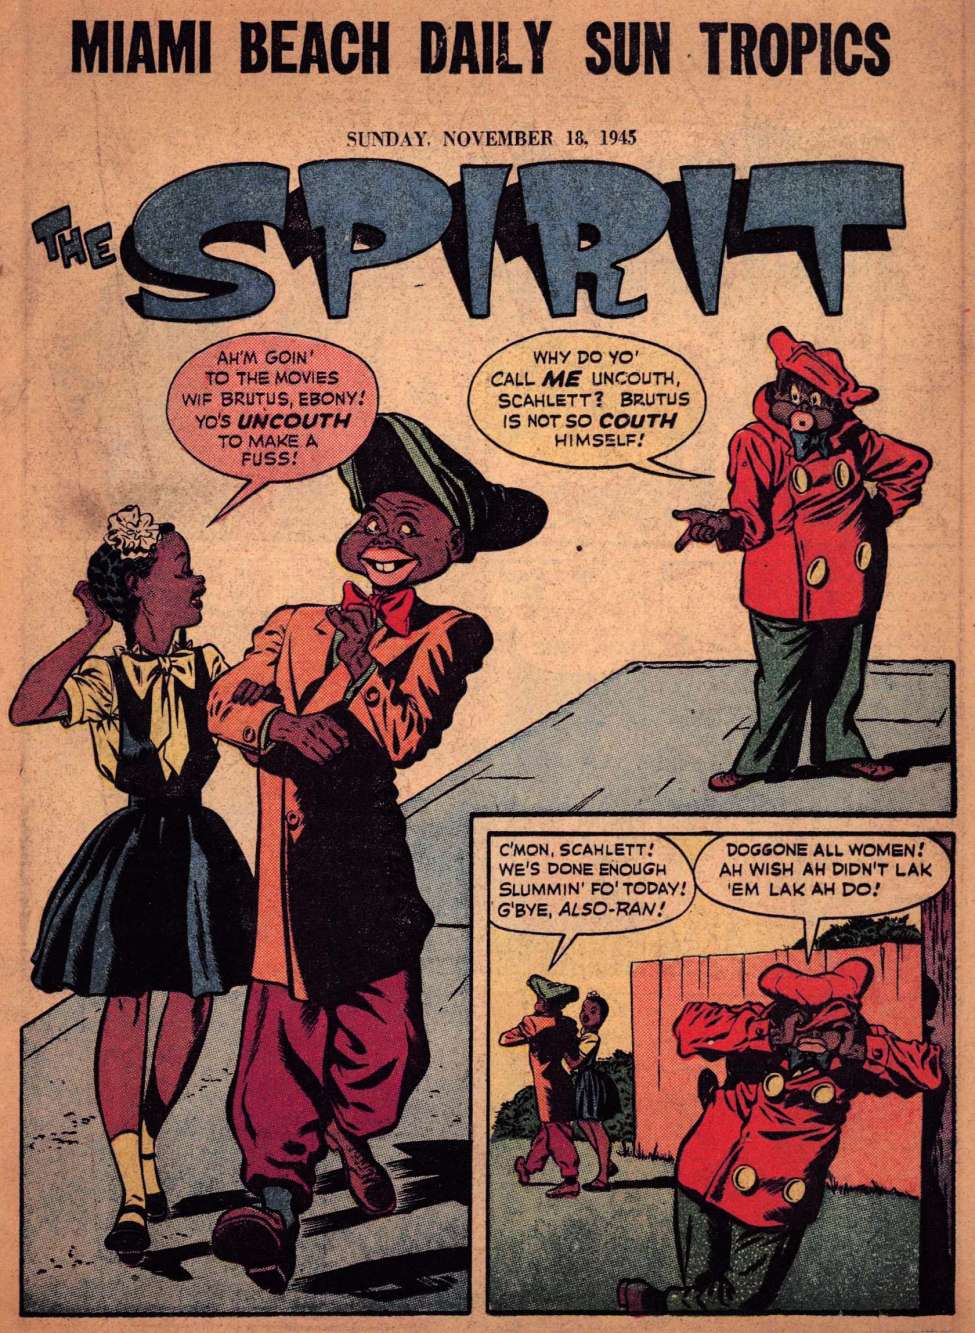 Book Cover For The Spirit (1945-11-18) - Miami Beach Daily Sun - Version 1